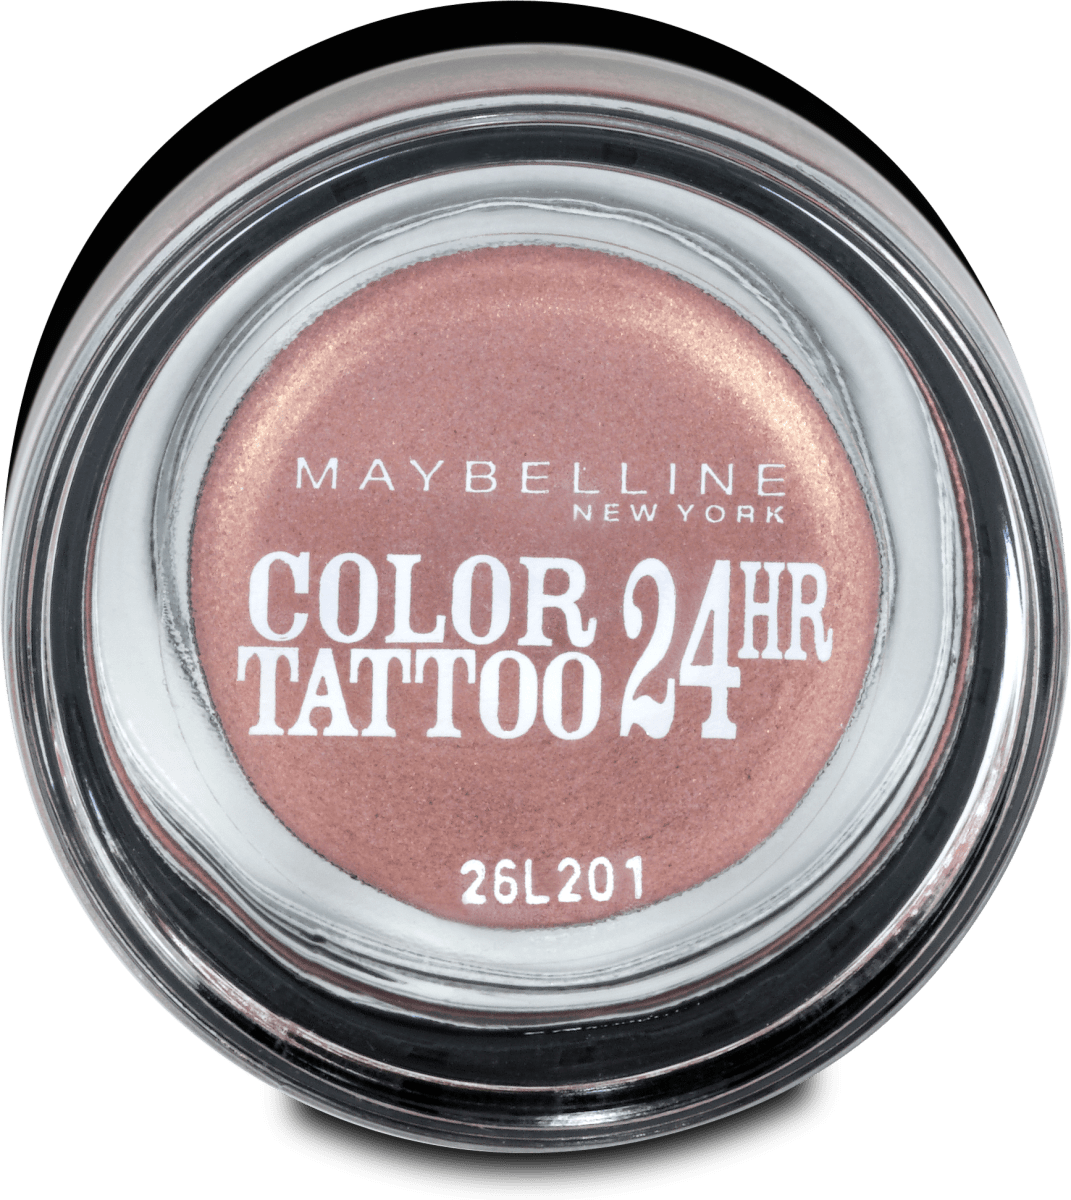 Maybelline New York Lidschatten Tattoo Gold, 35 65 ml Color Pink 24hr